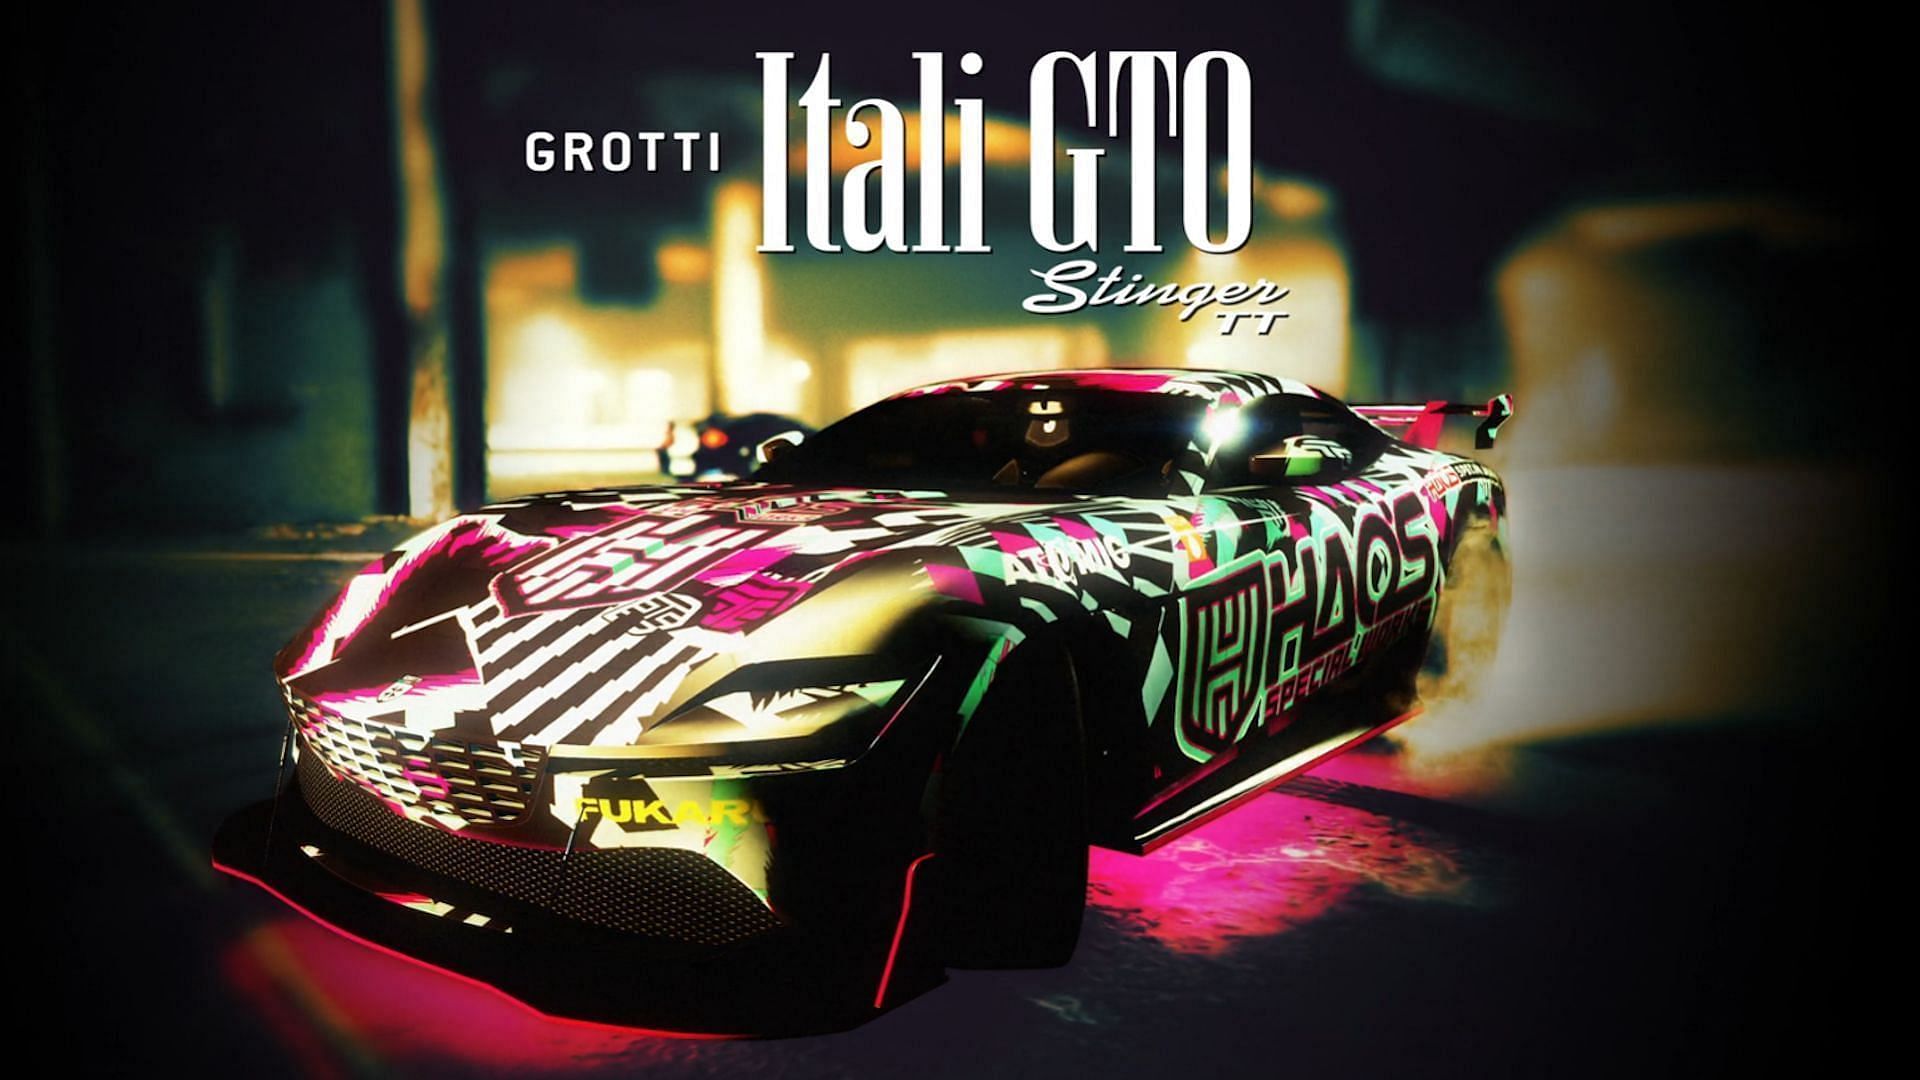 The HSW Itali GTO Stinger TT is insanely good (Image via Rockstar Games)